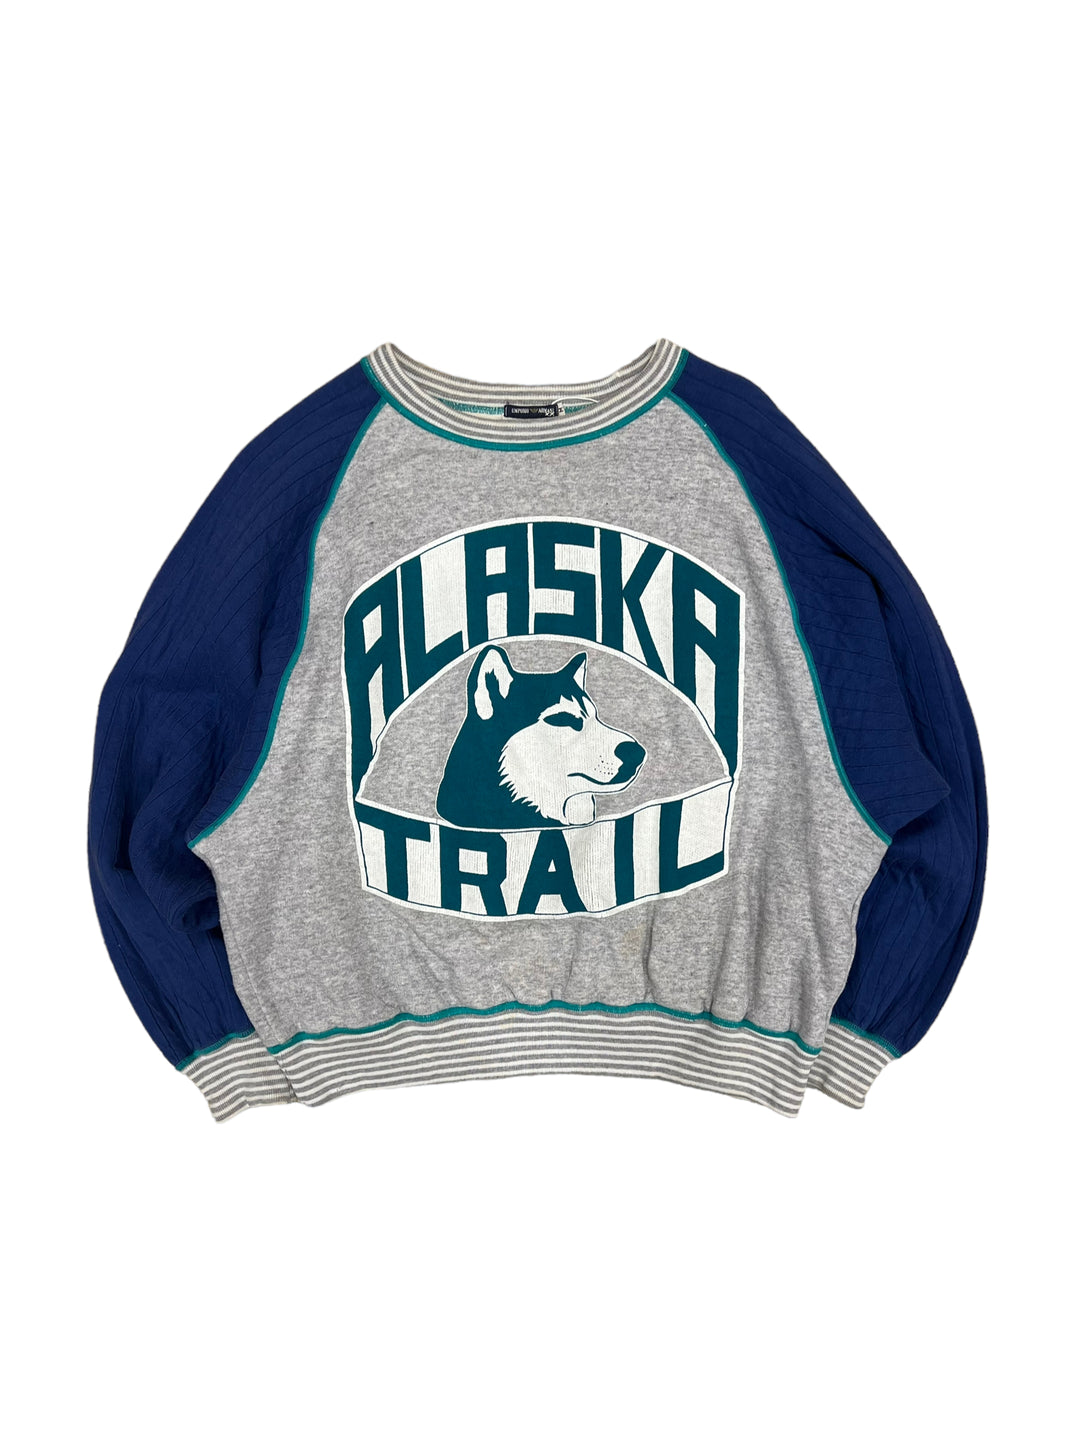 1980 Emporio Armani Alaska Trail Crewneck Men’s Medium